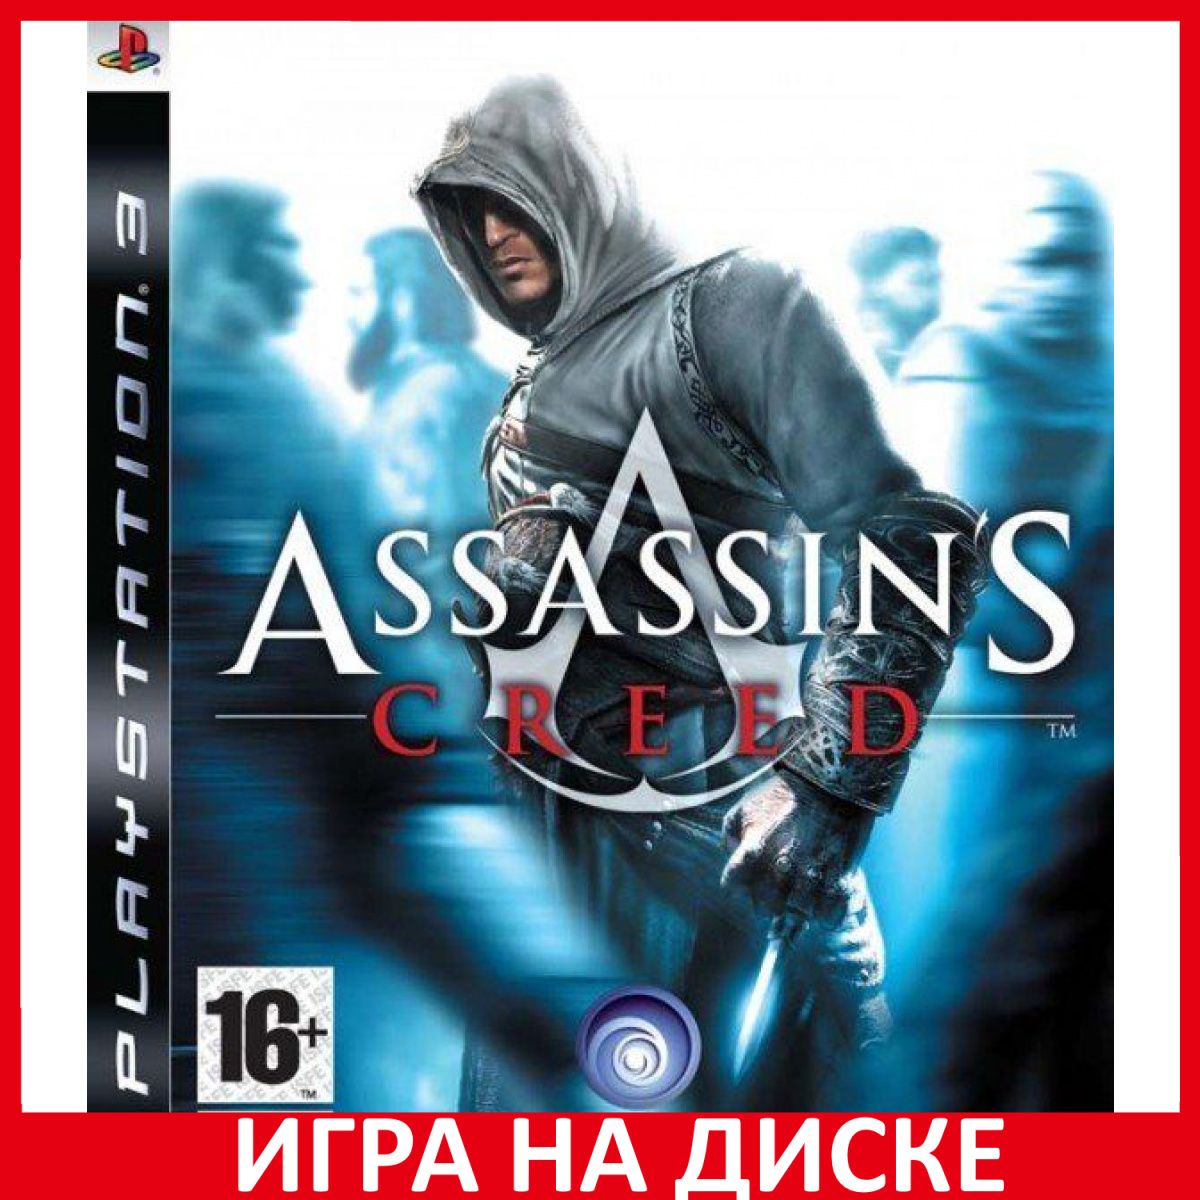 Игра на playstation creed. Assassin's Creed возрастные ограничения. Игра ассасин на сони плейстейшен. Ассасин Крид 1 на плейстейшен 2. Assassin's Creed ps2.